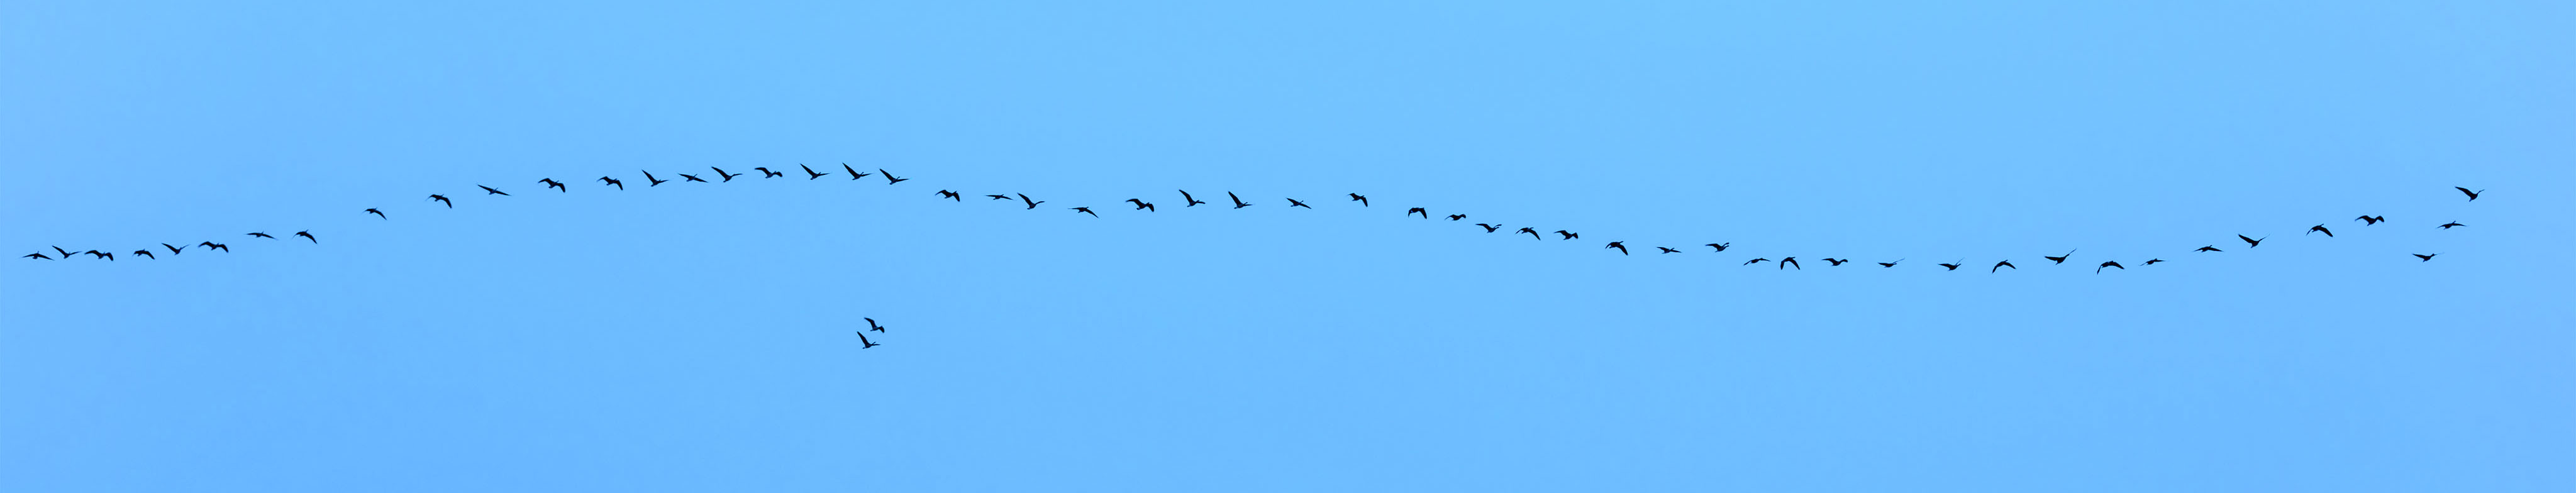 canada geese panorama